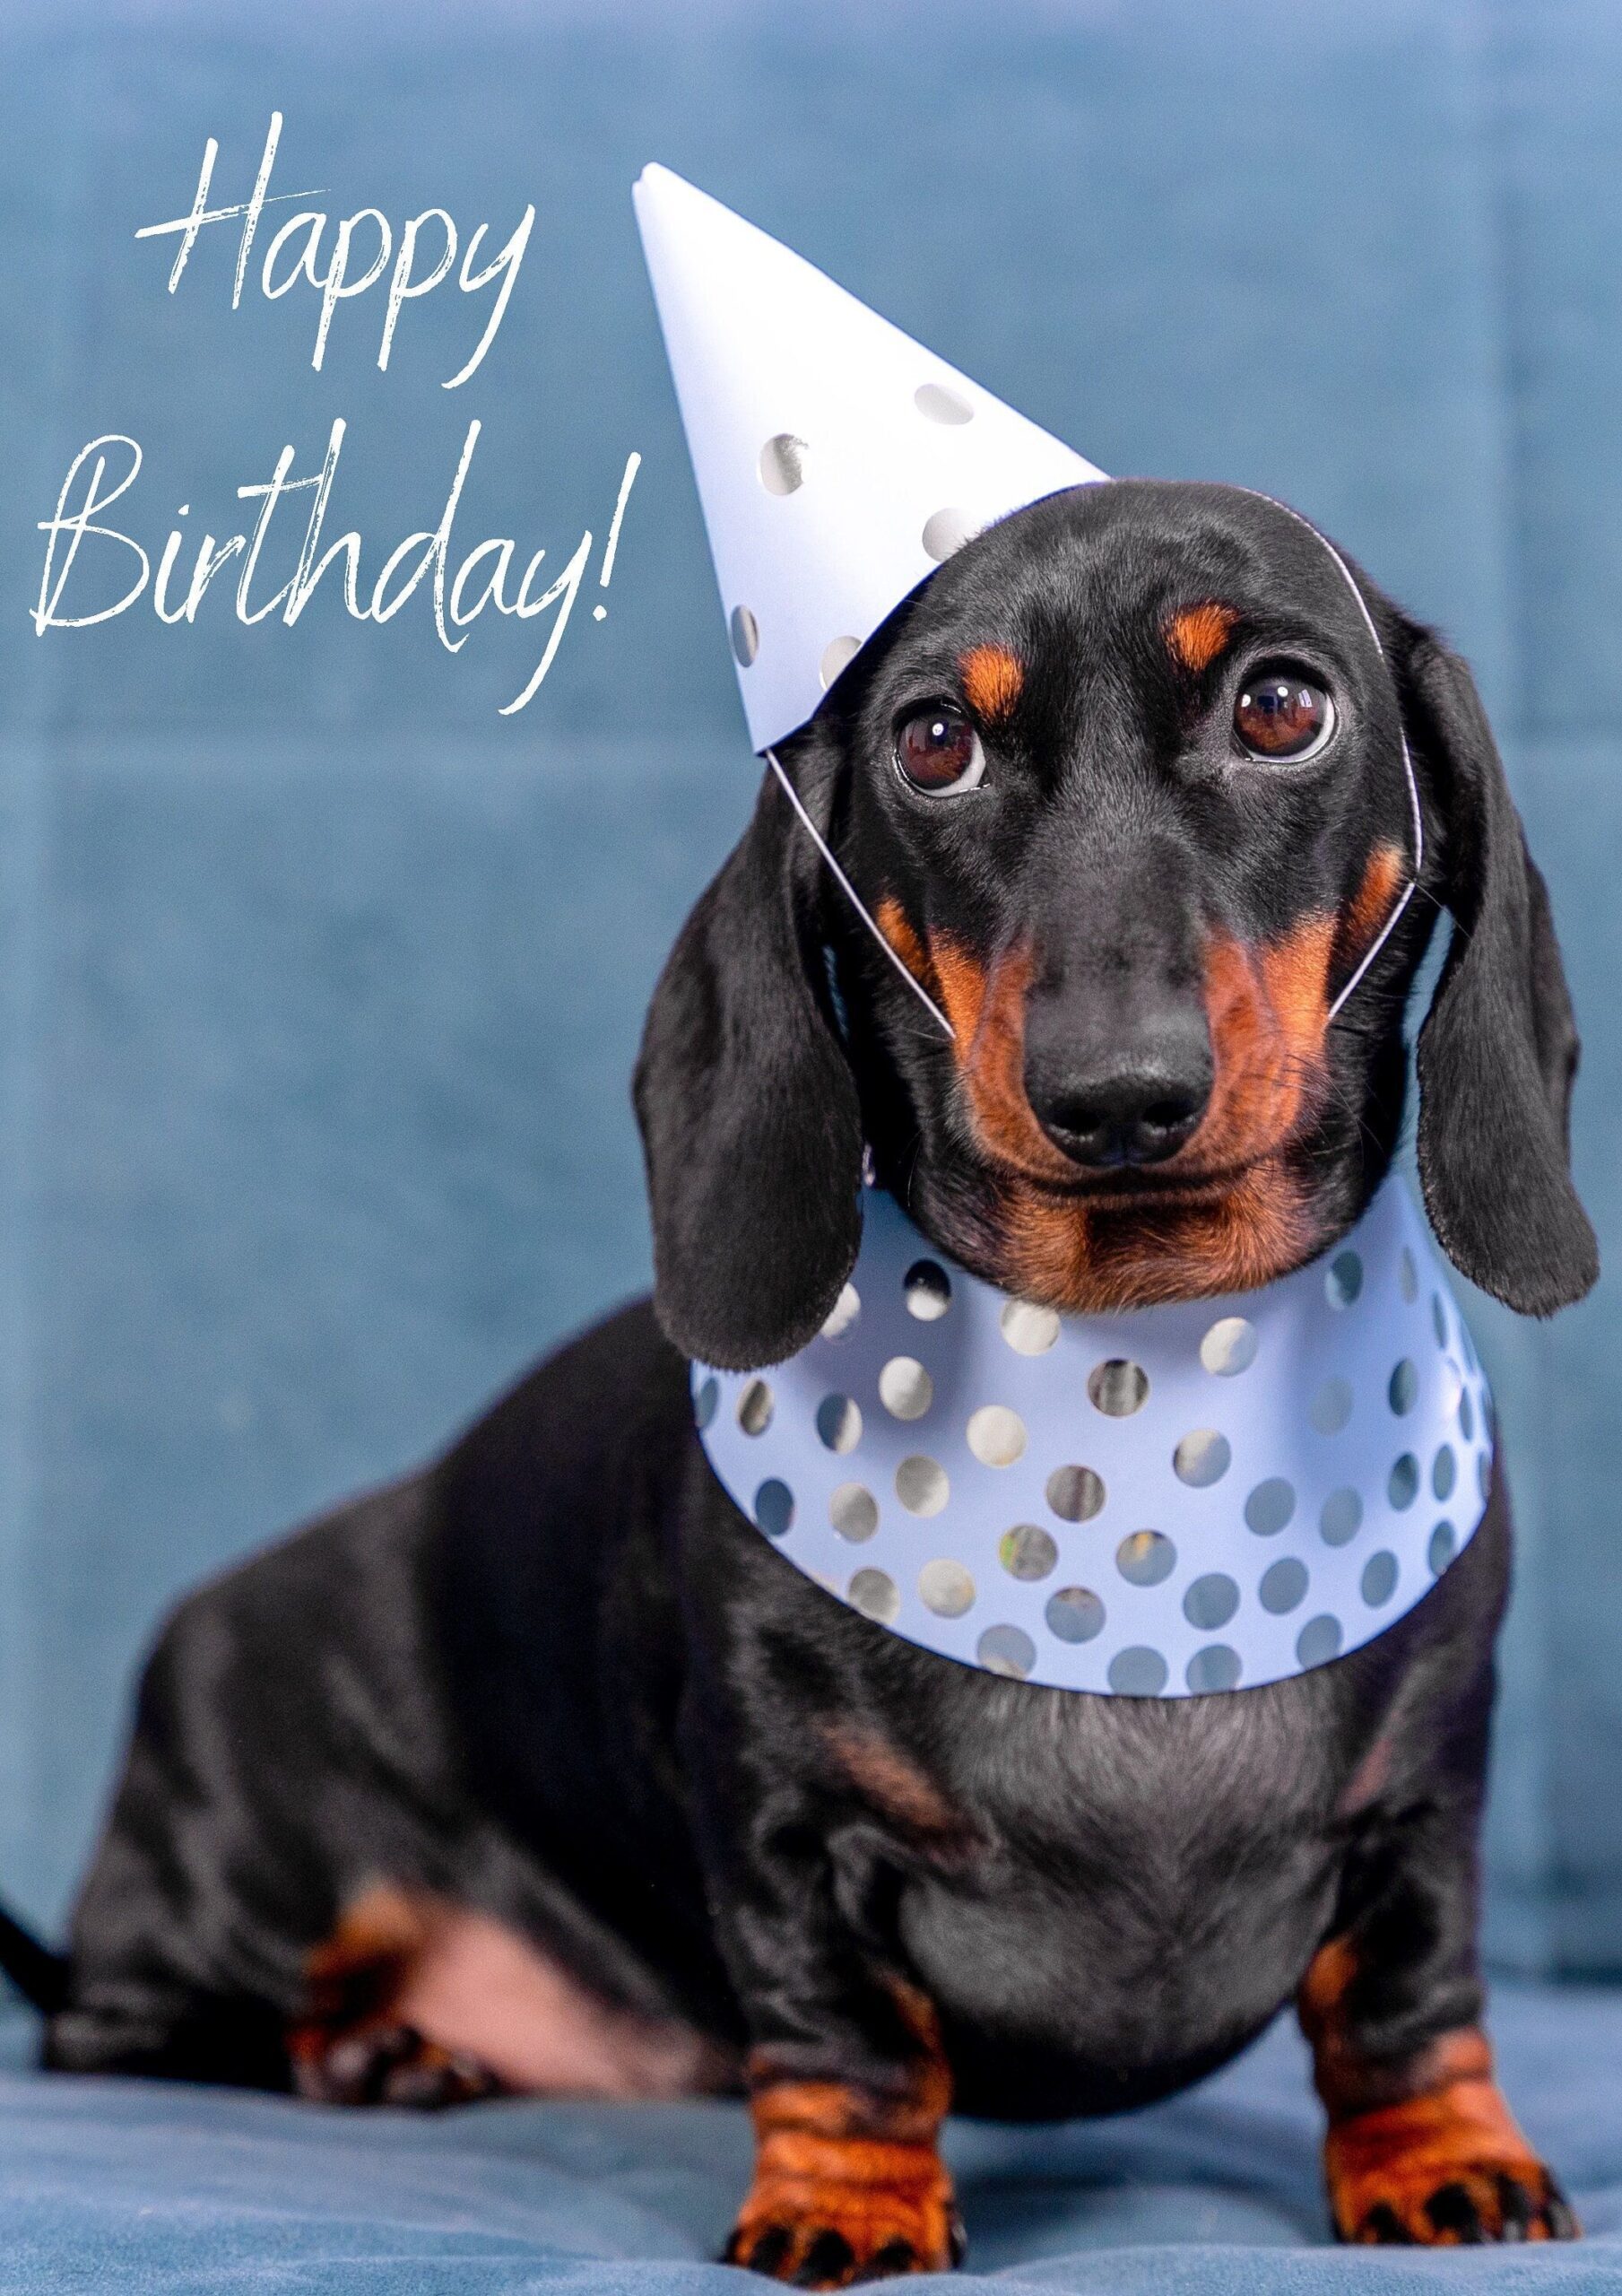 Happy Birthday Party Dachshund Greeting Card, Cute Dogs, Sausage dog